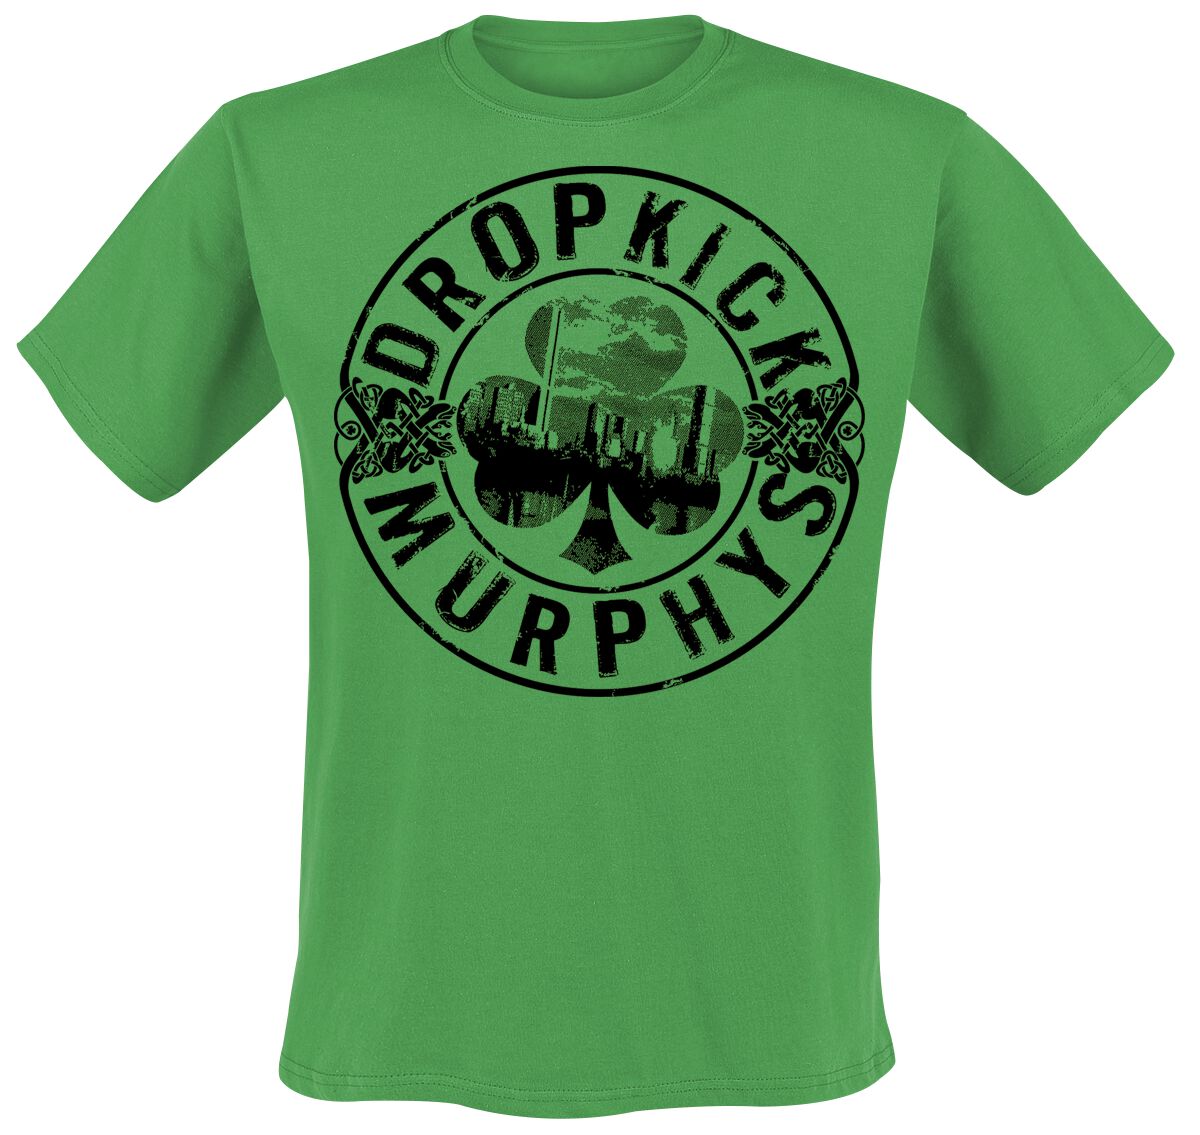 dropkick murphys t-shirt - boot - m bis xxl - fÃ¼r mÃ¤nner - grÃ¶ÃŸe xxl - - lizenziertes merchandise! grÃ¼n